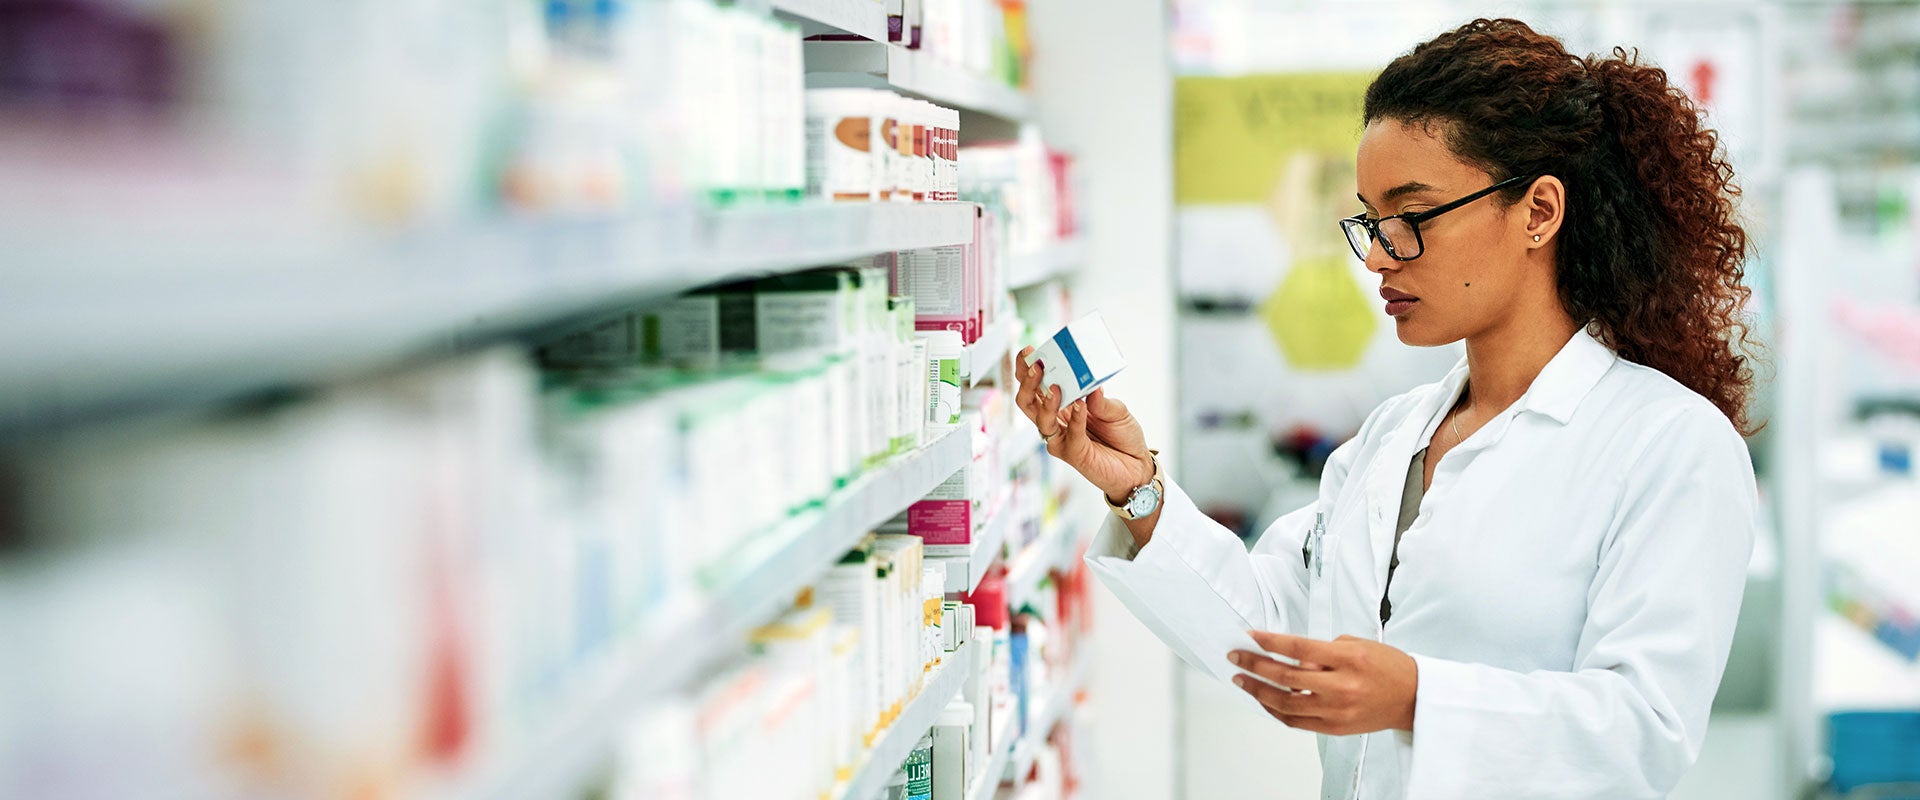 pharmacist viewing medicines